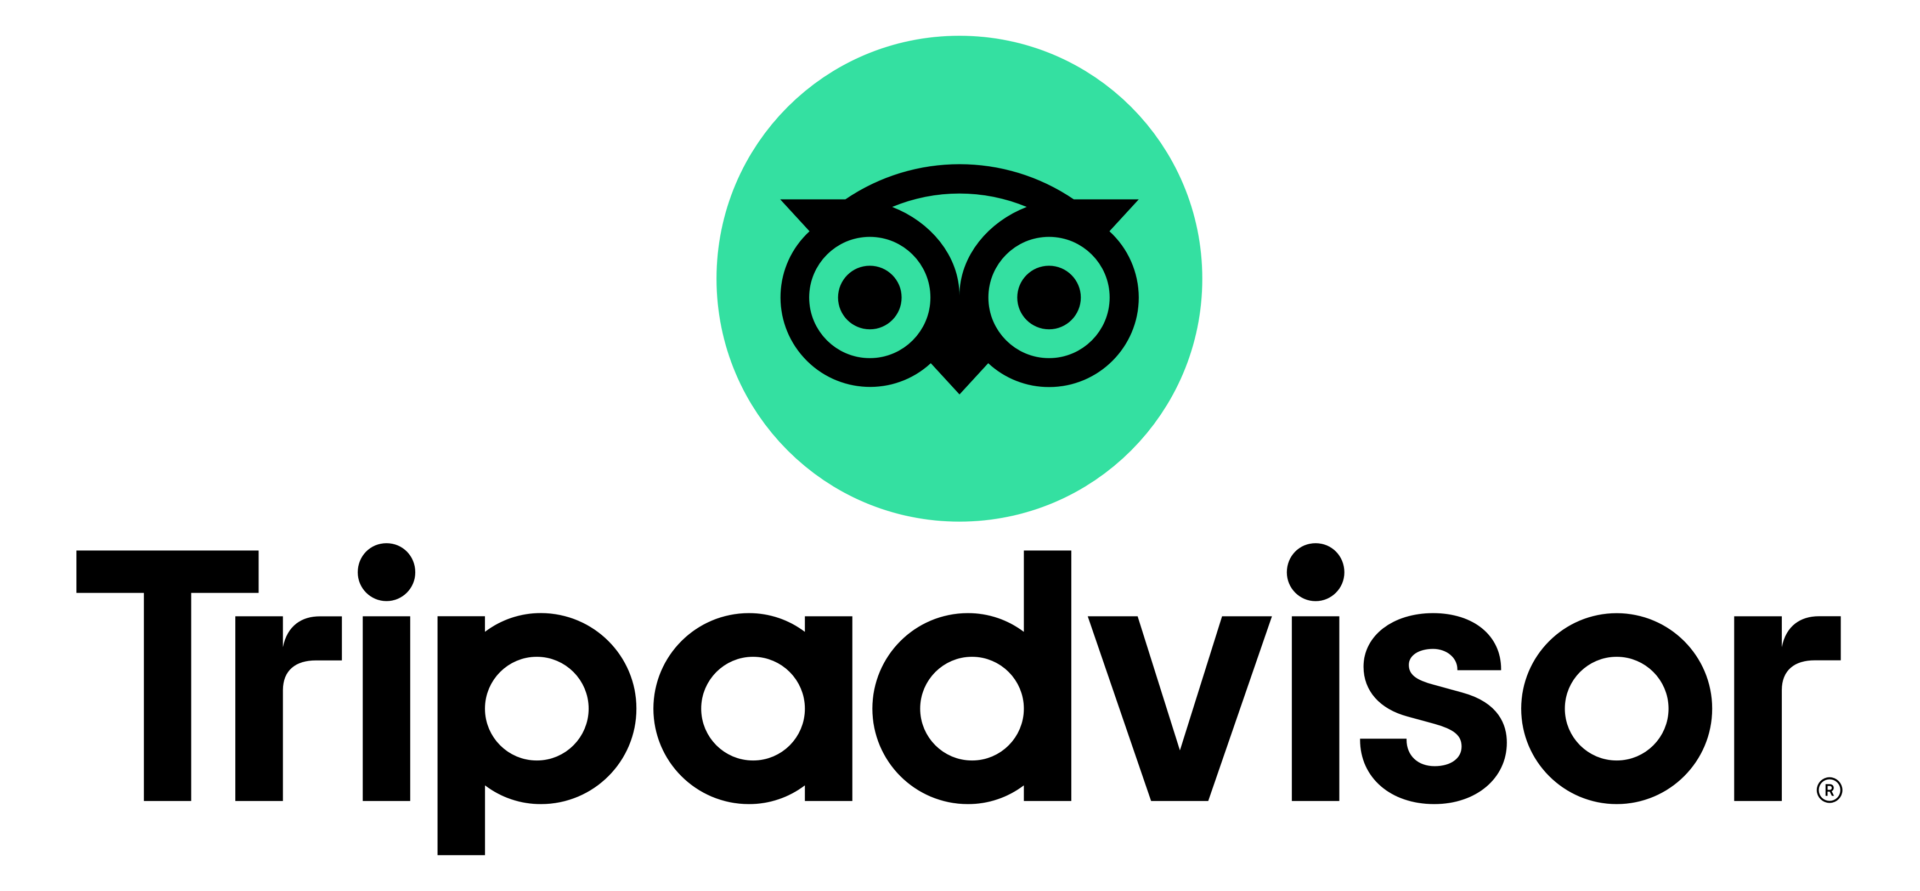 TripAdvisor green and black logo